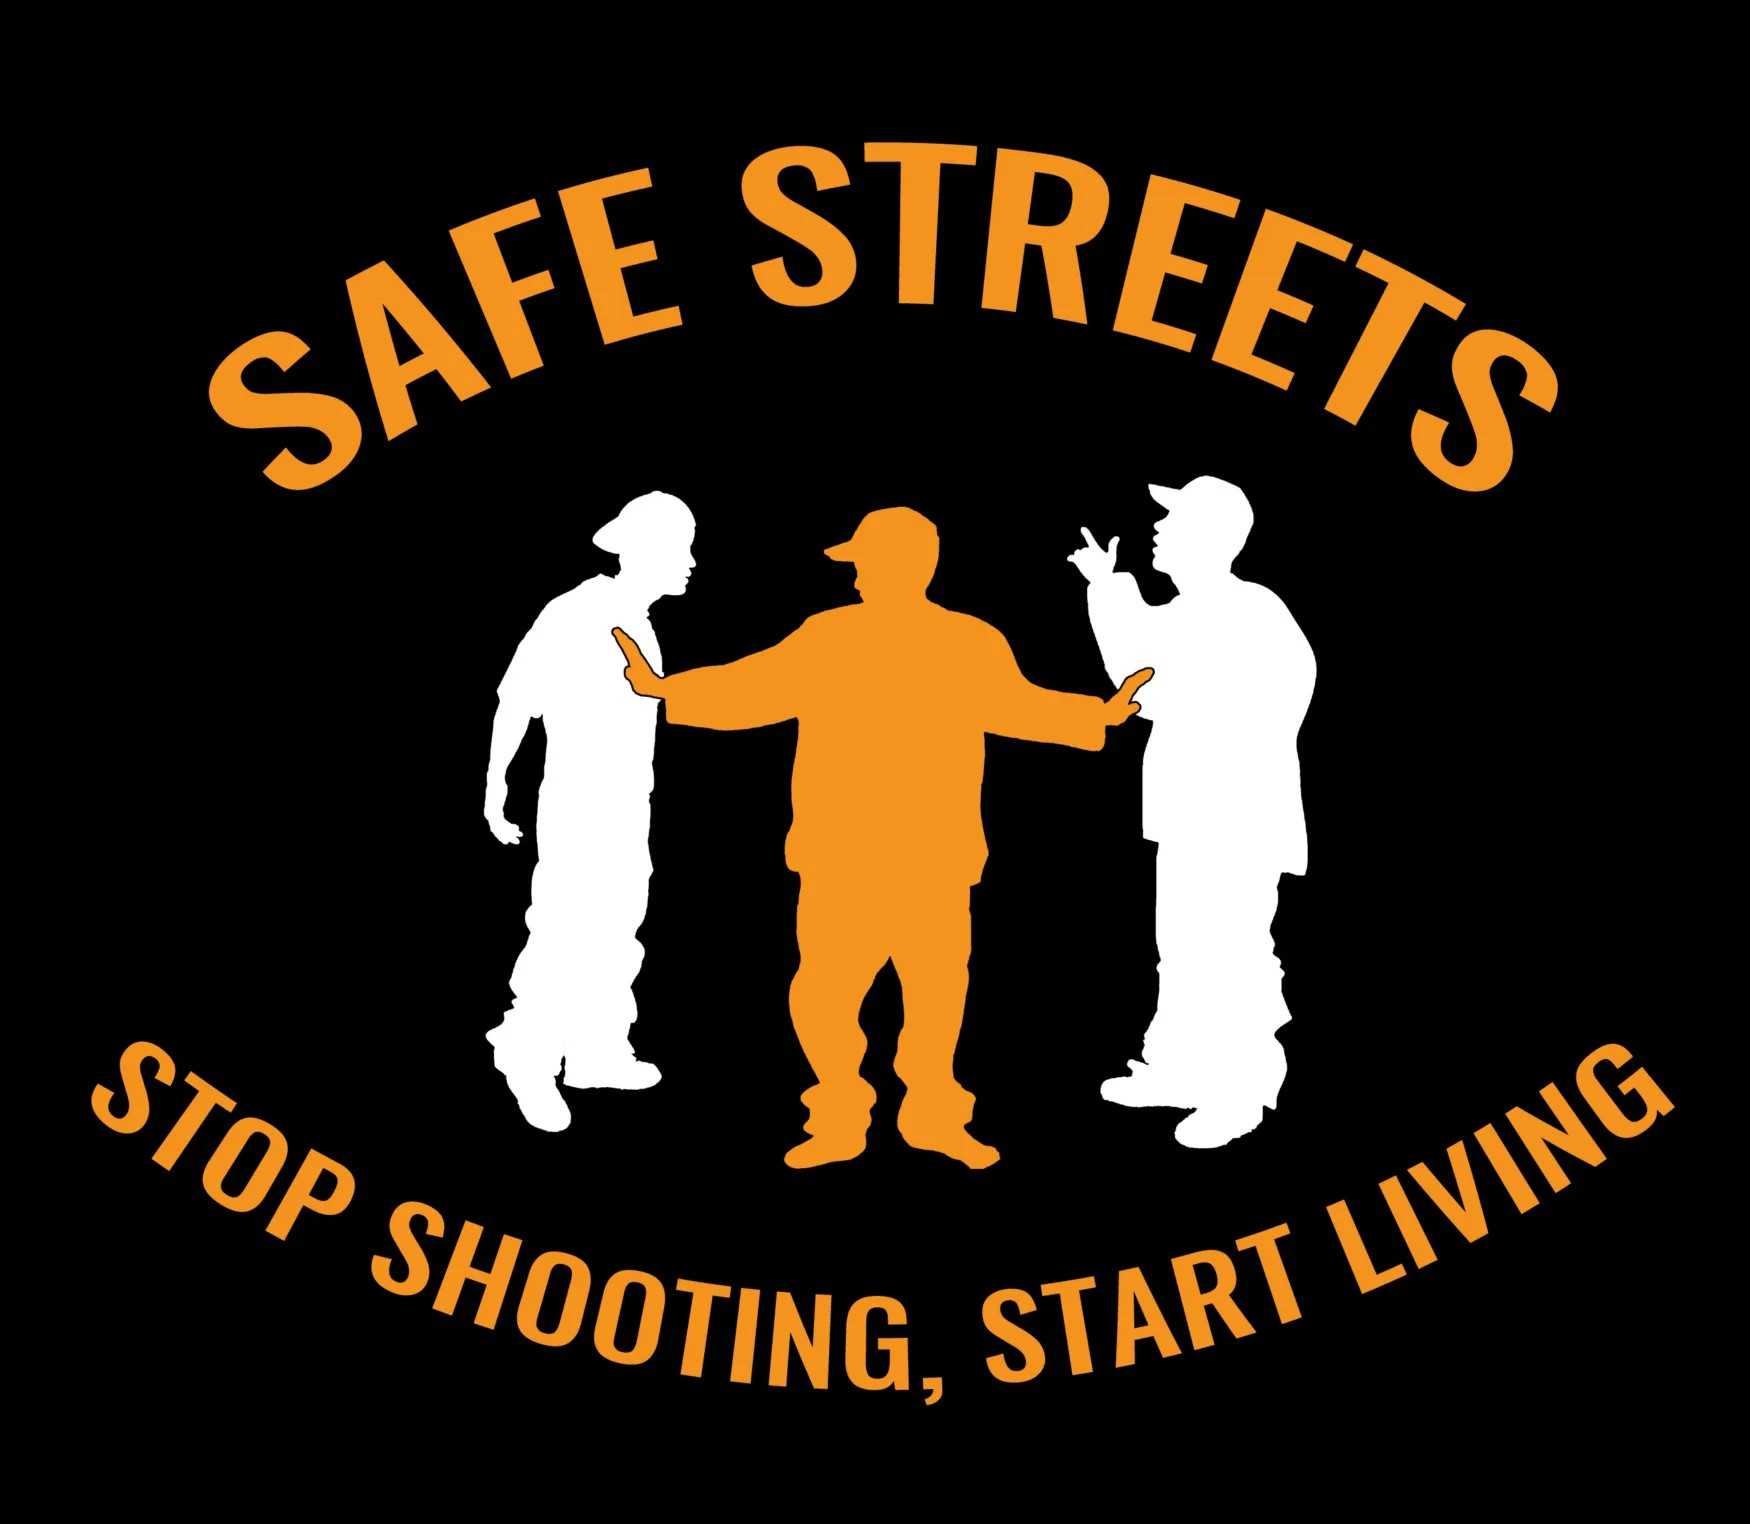 LifeBridge Health's Center for Hope expands oversight of Safe Streets sites